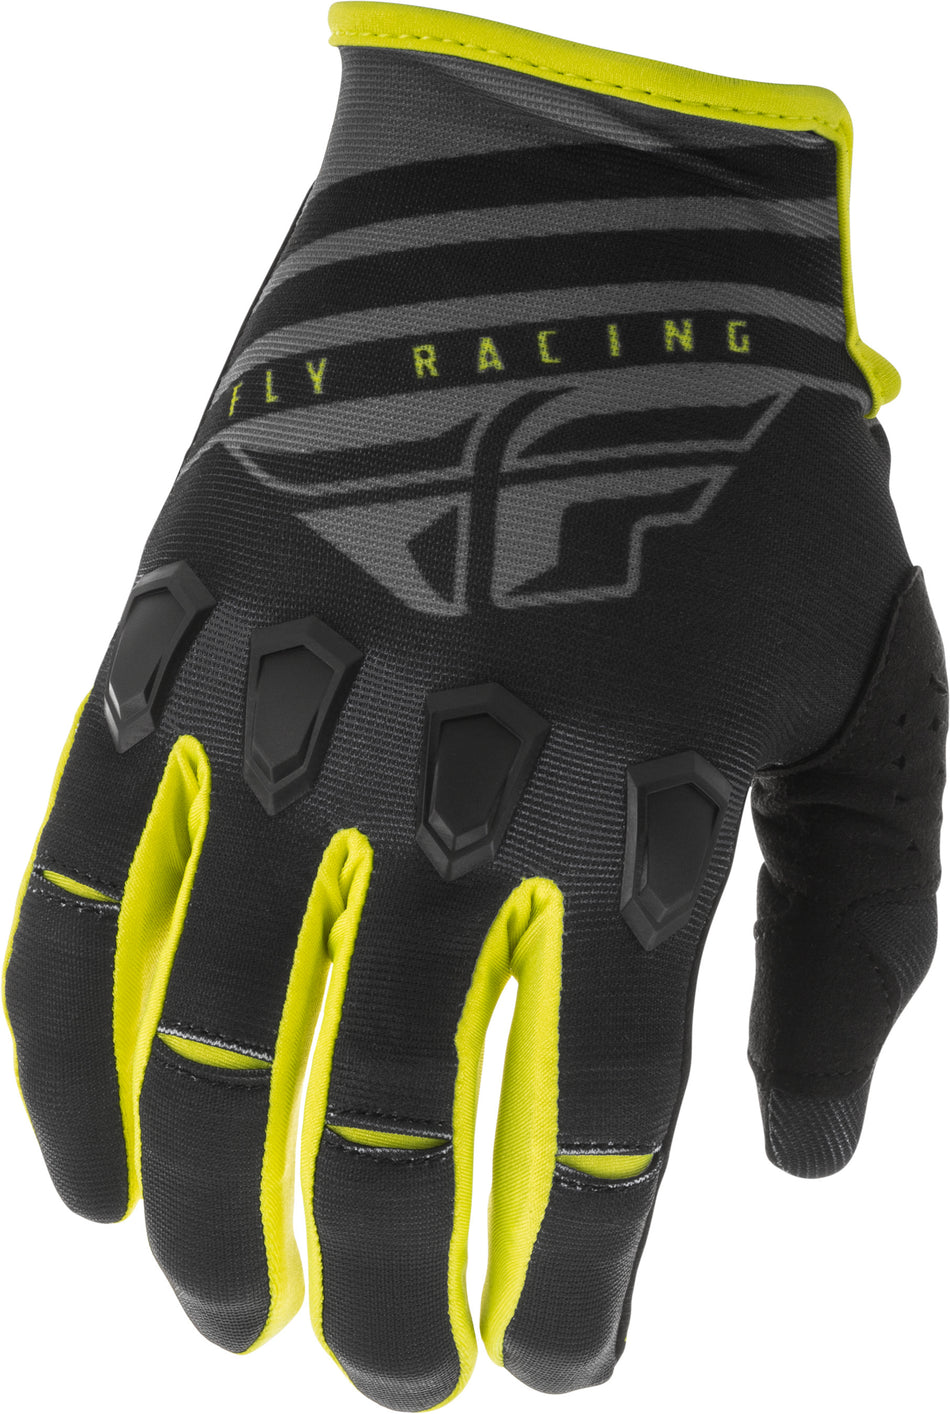 FLY RACING Kinetic K220 Gloves Black/Grey/Hi-Vis Sz 05 373-51505